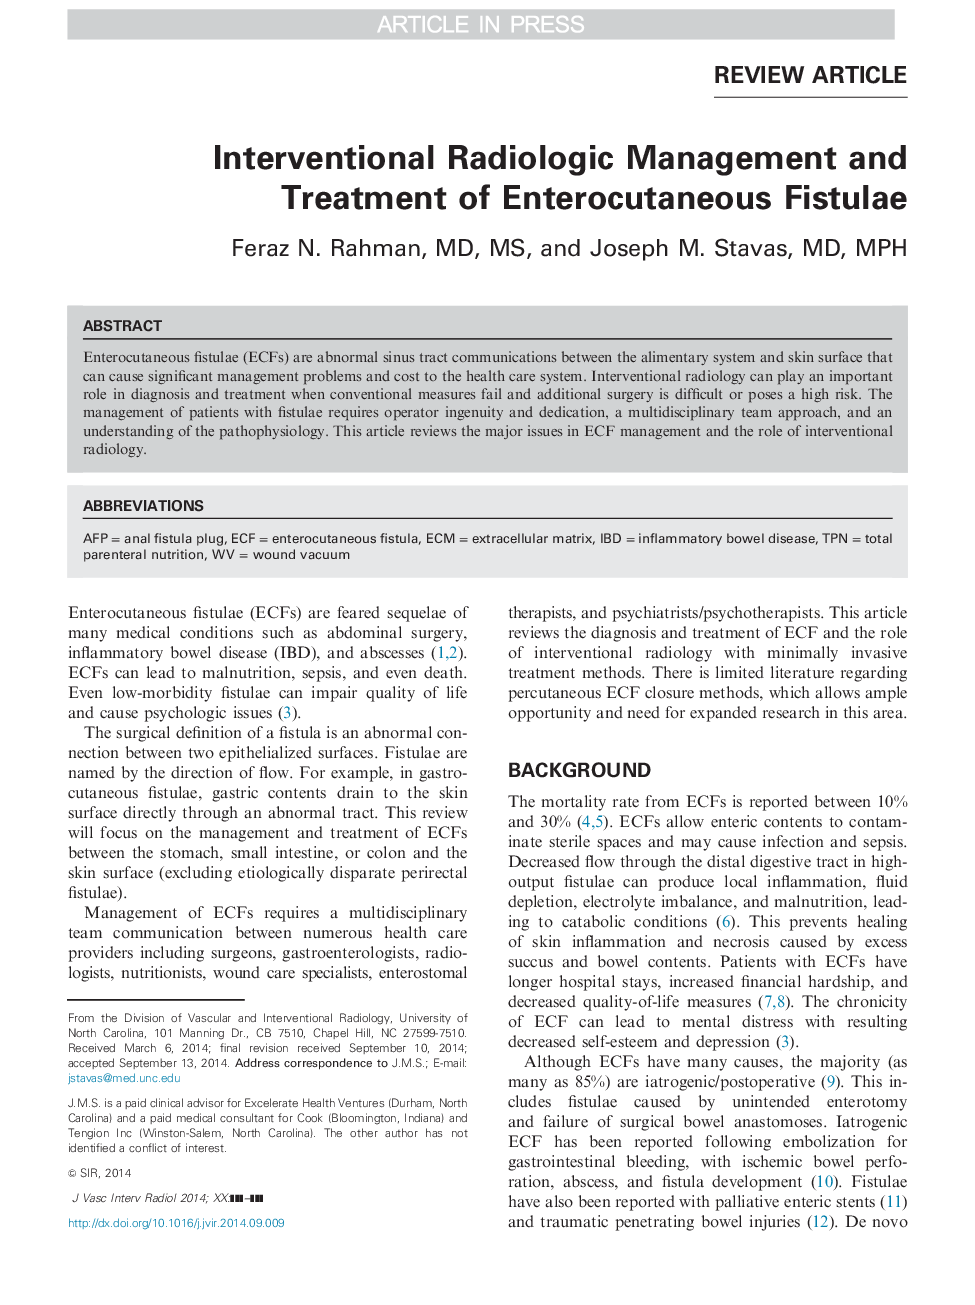 Interventional Radiologic Management and Treatment of Enterocutaneous Fistulae